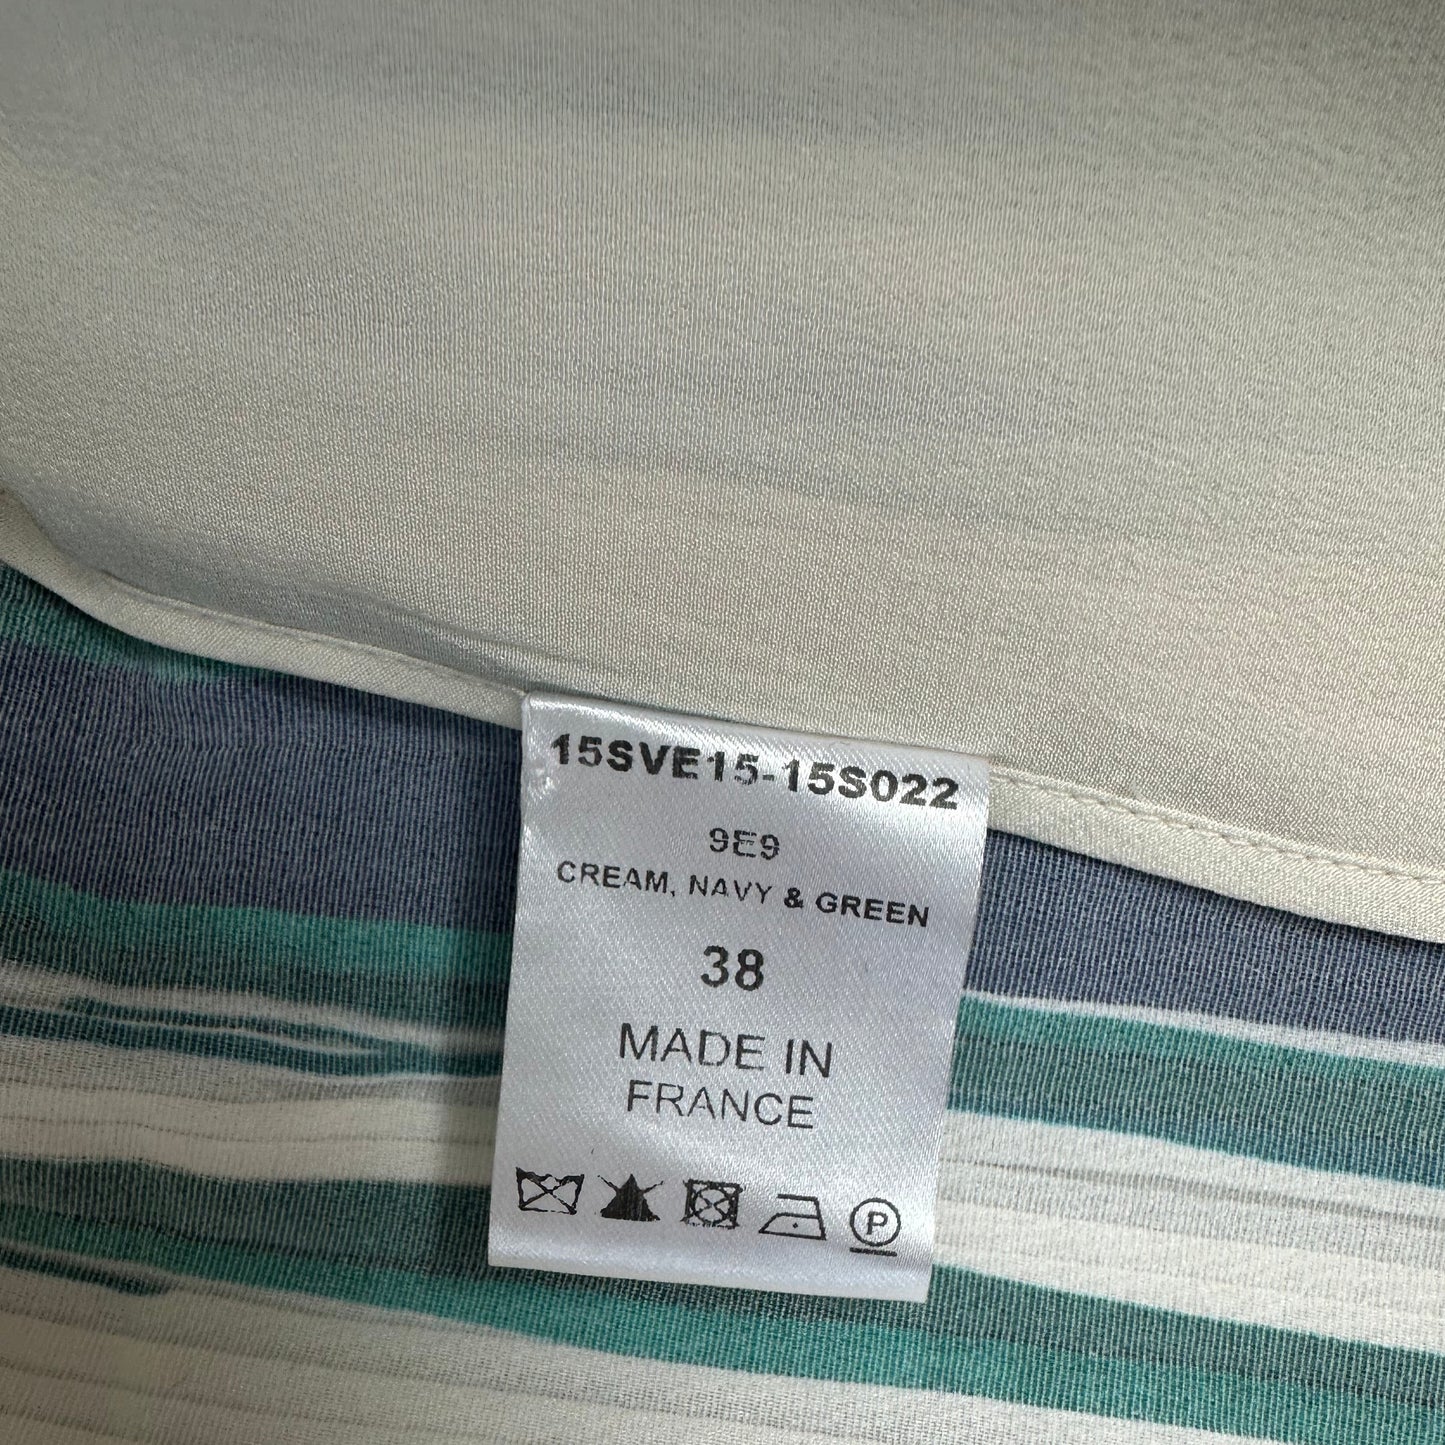 Chloé 2015 Resort Silk Single-Breasted Blazer Jacket Size 38